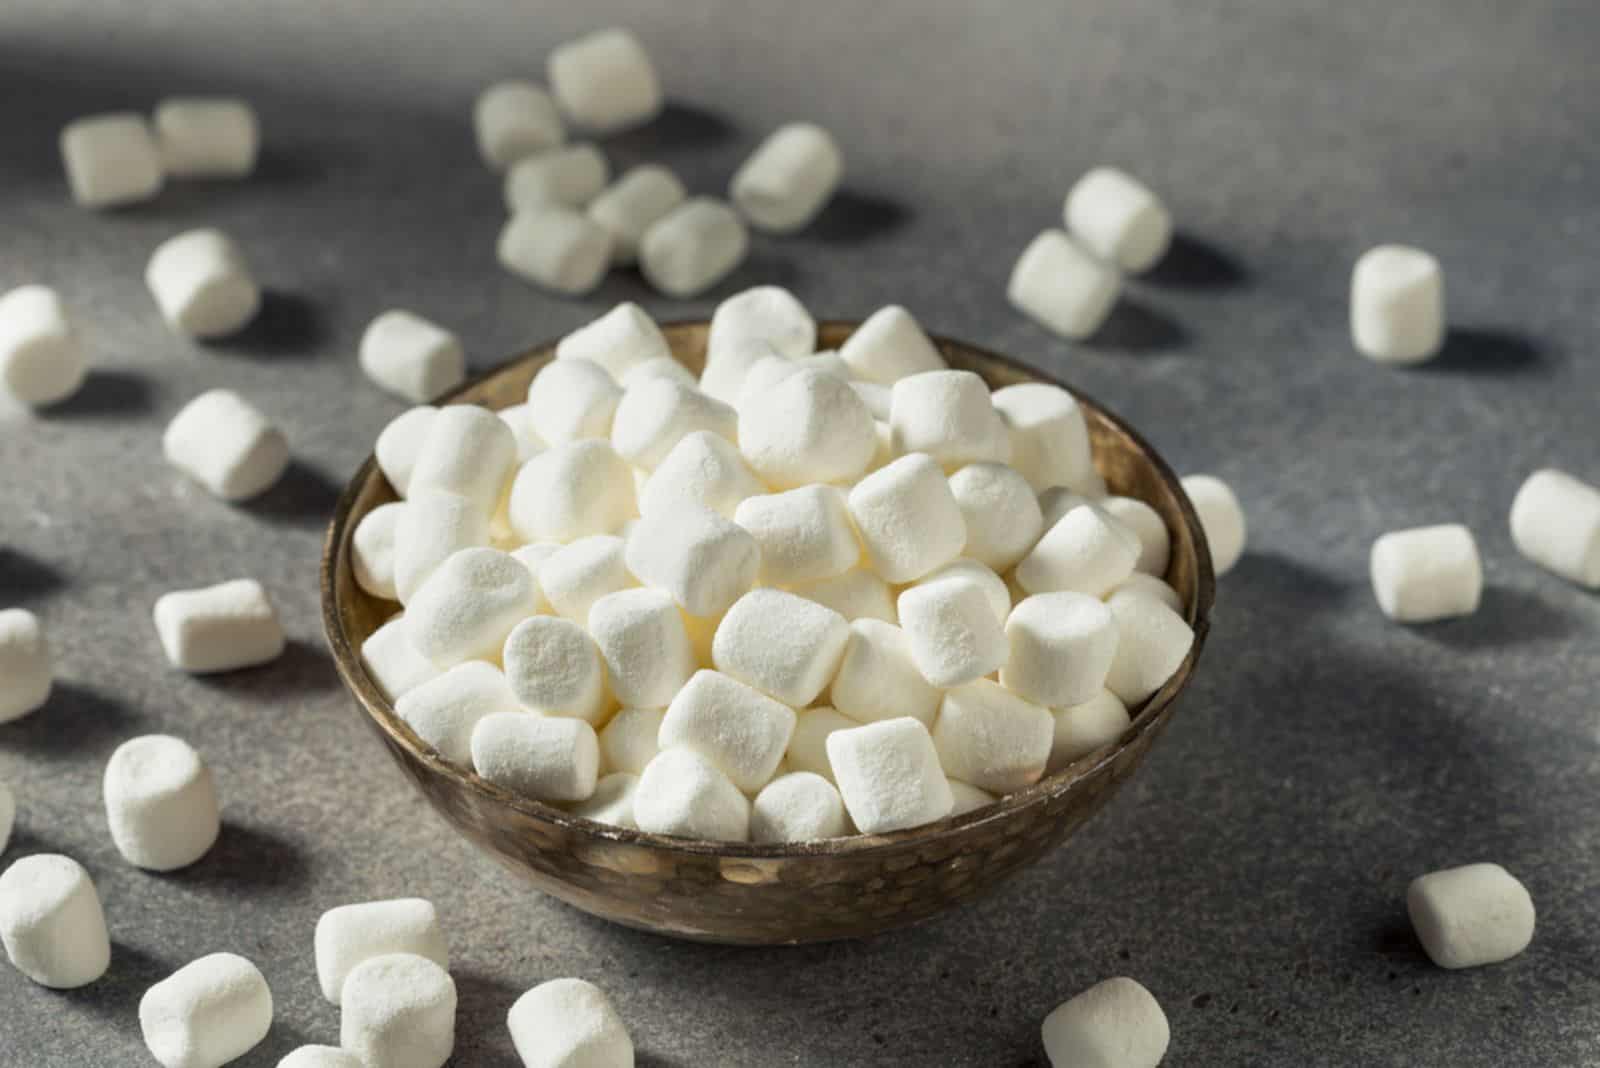 Unhealthy Sugary White Mini Marshmallows in a Bowl